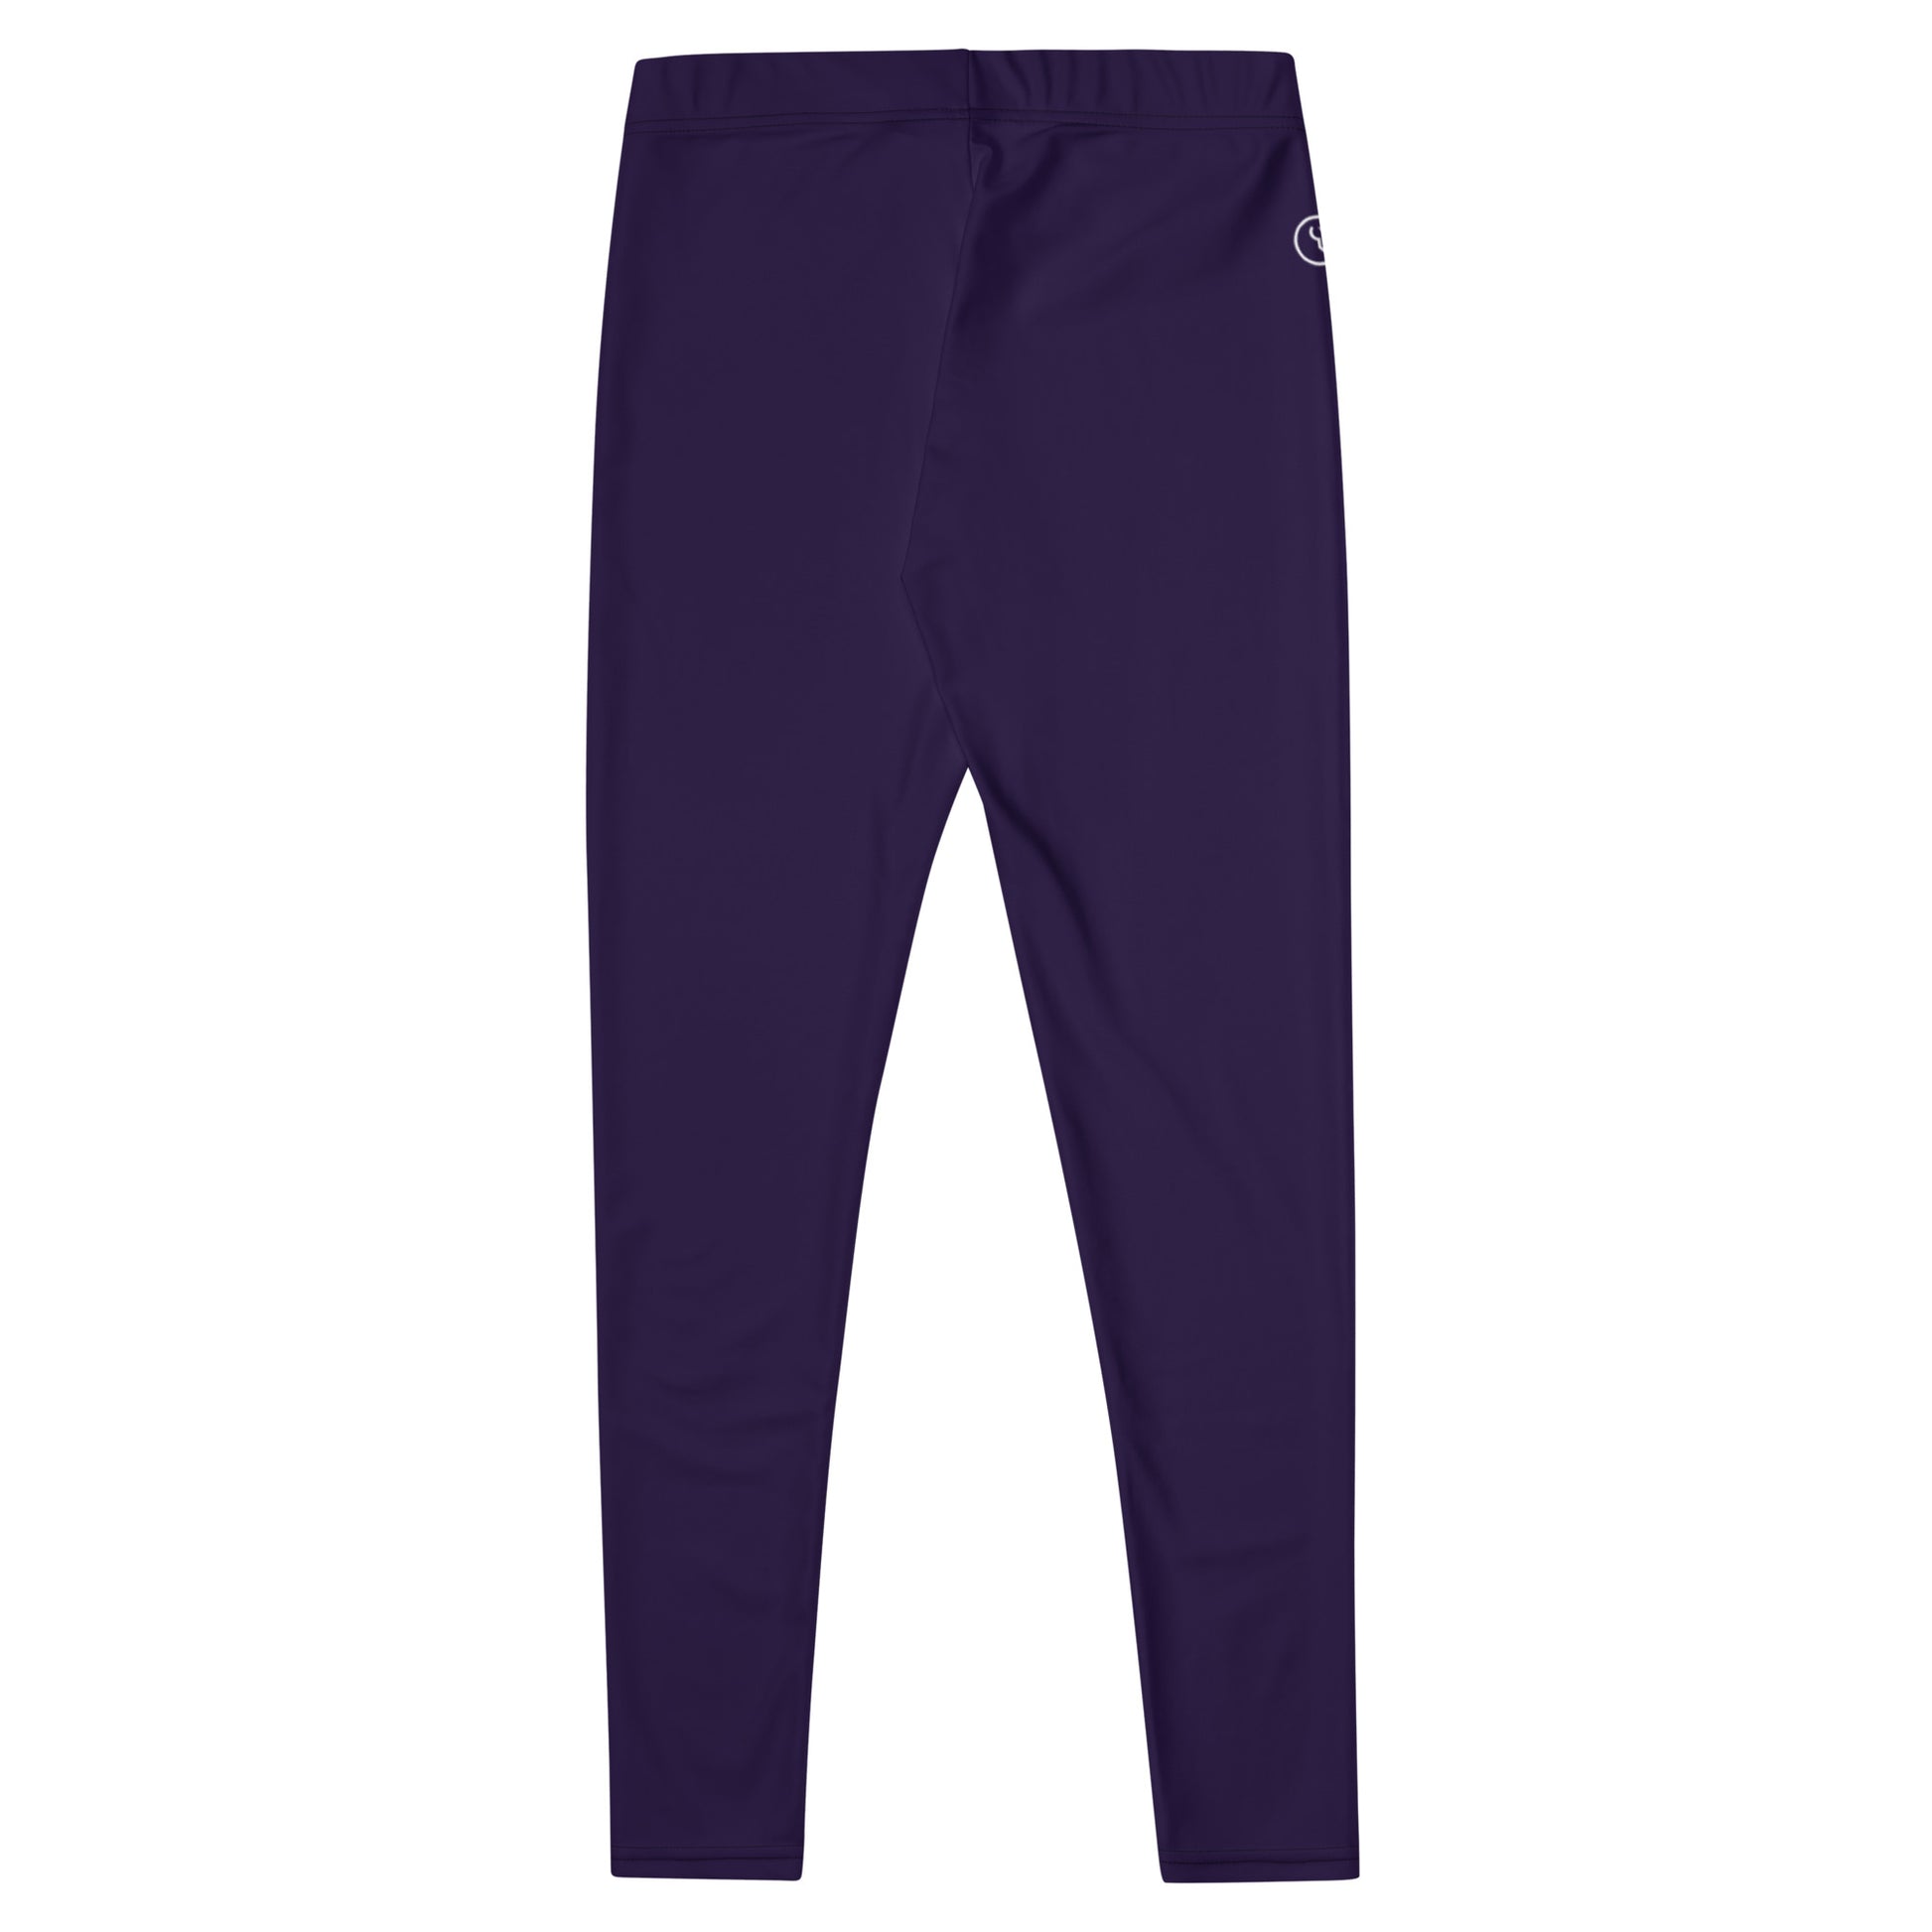 Humble Sportswear, women’s stretchy color match purple spandex workout leggings